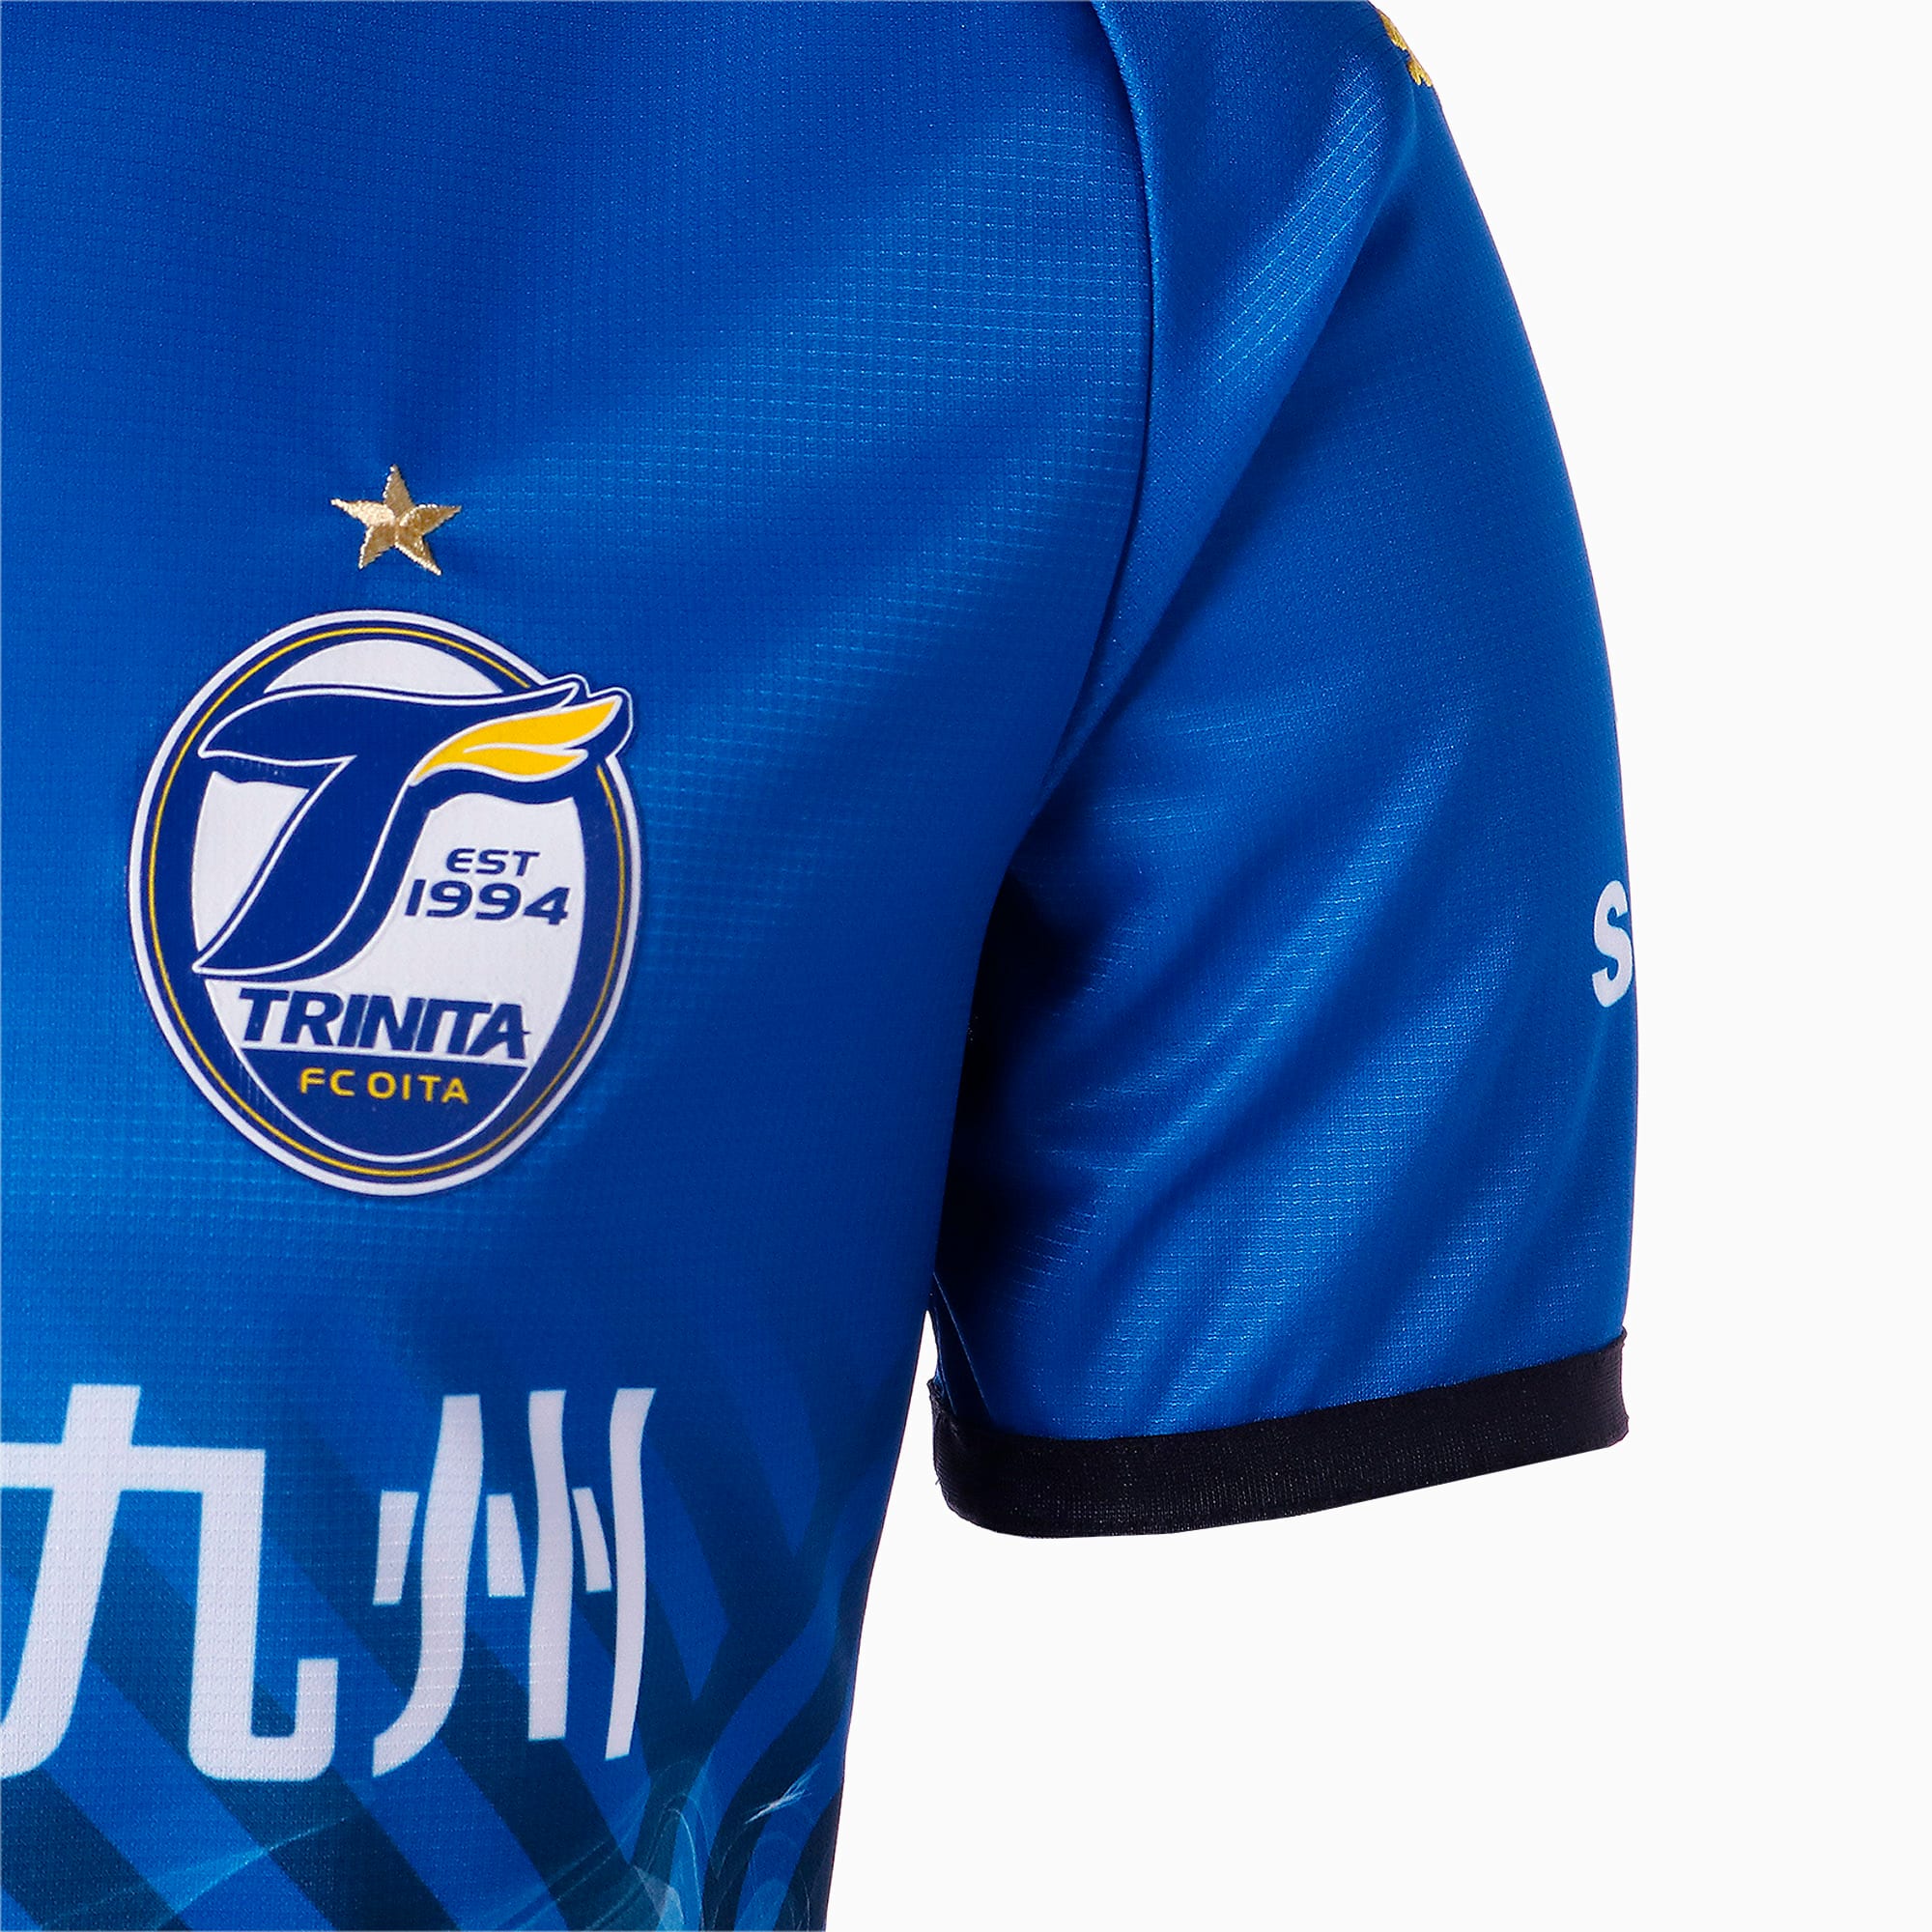 Puma公式 大分トリニータ 21 ホーム 半袖 ゲームシャツ ユニフォーム サッカー メンズ